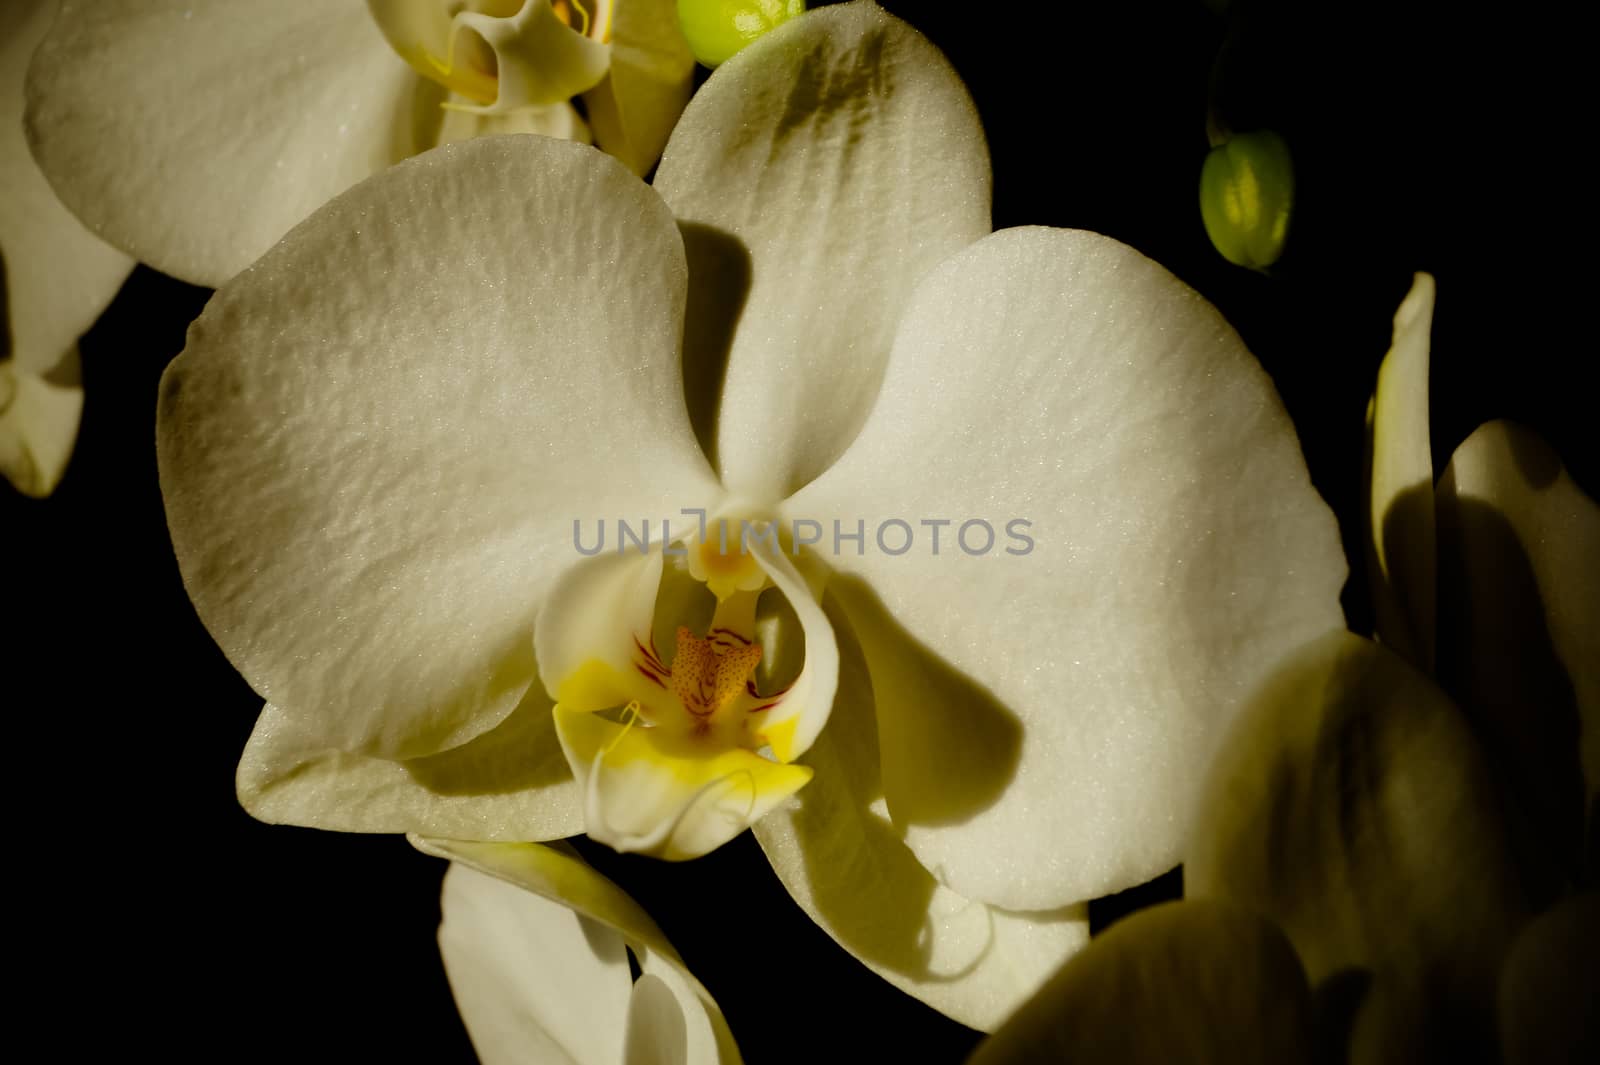 beautiful white Orchid flower flora macro photo by Oleczka11